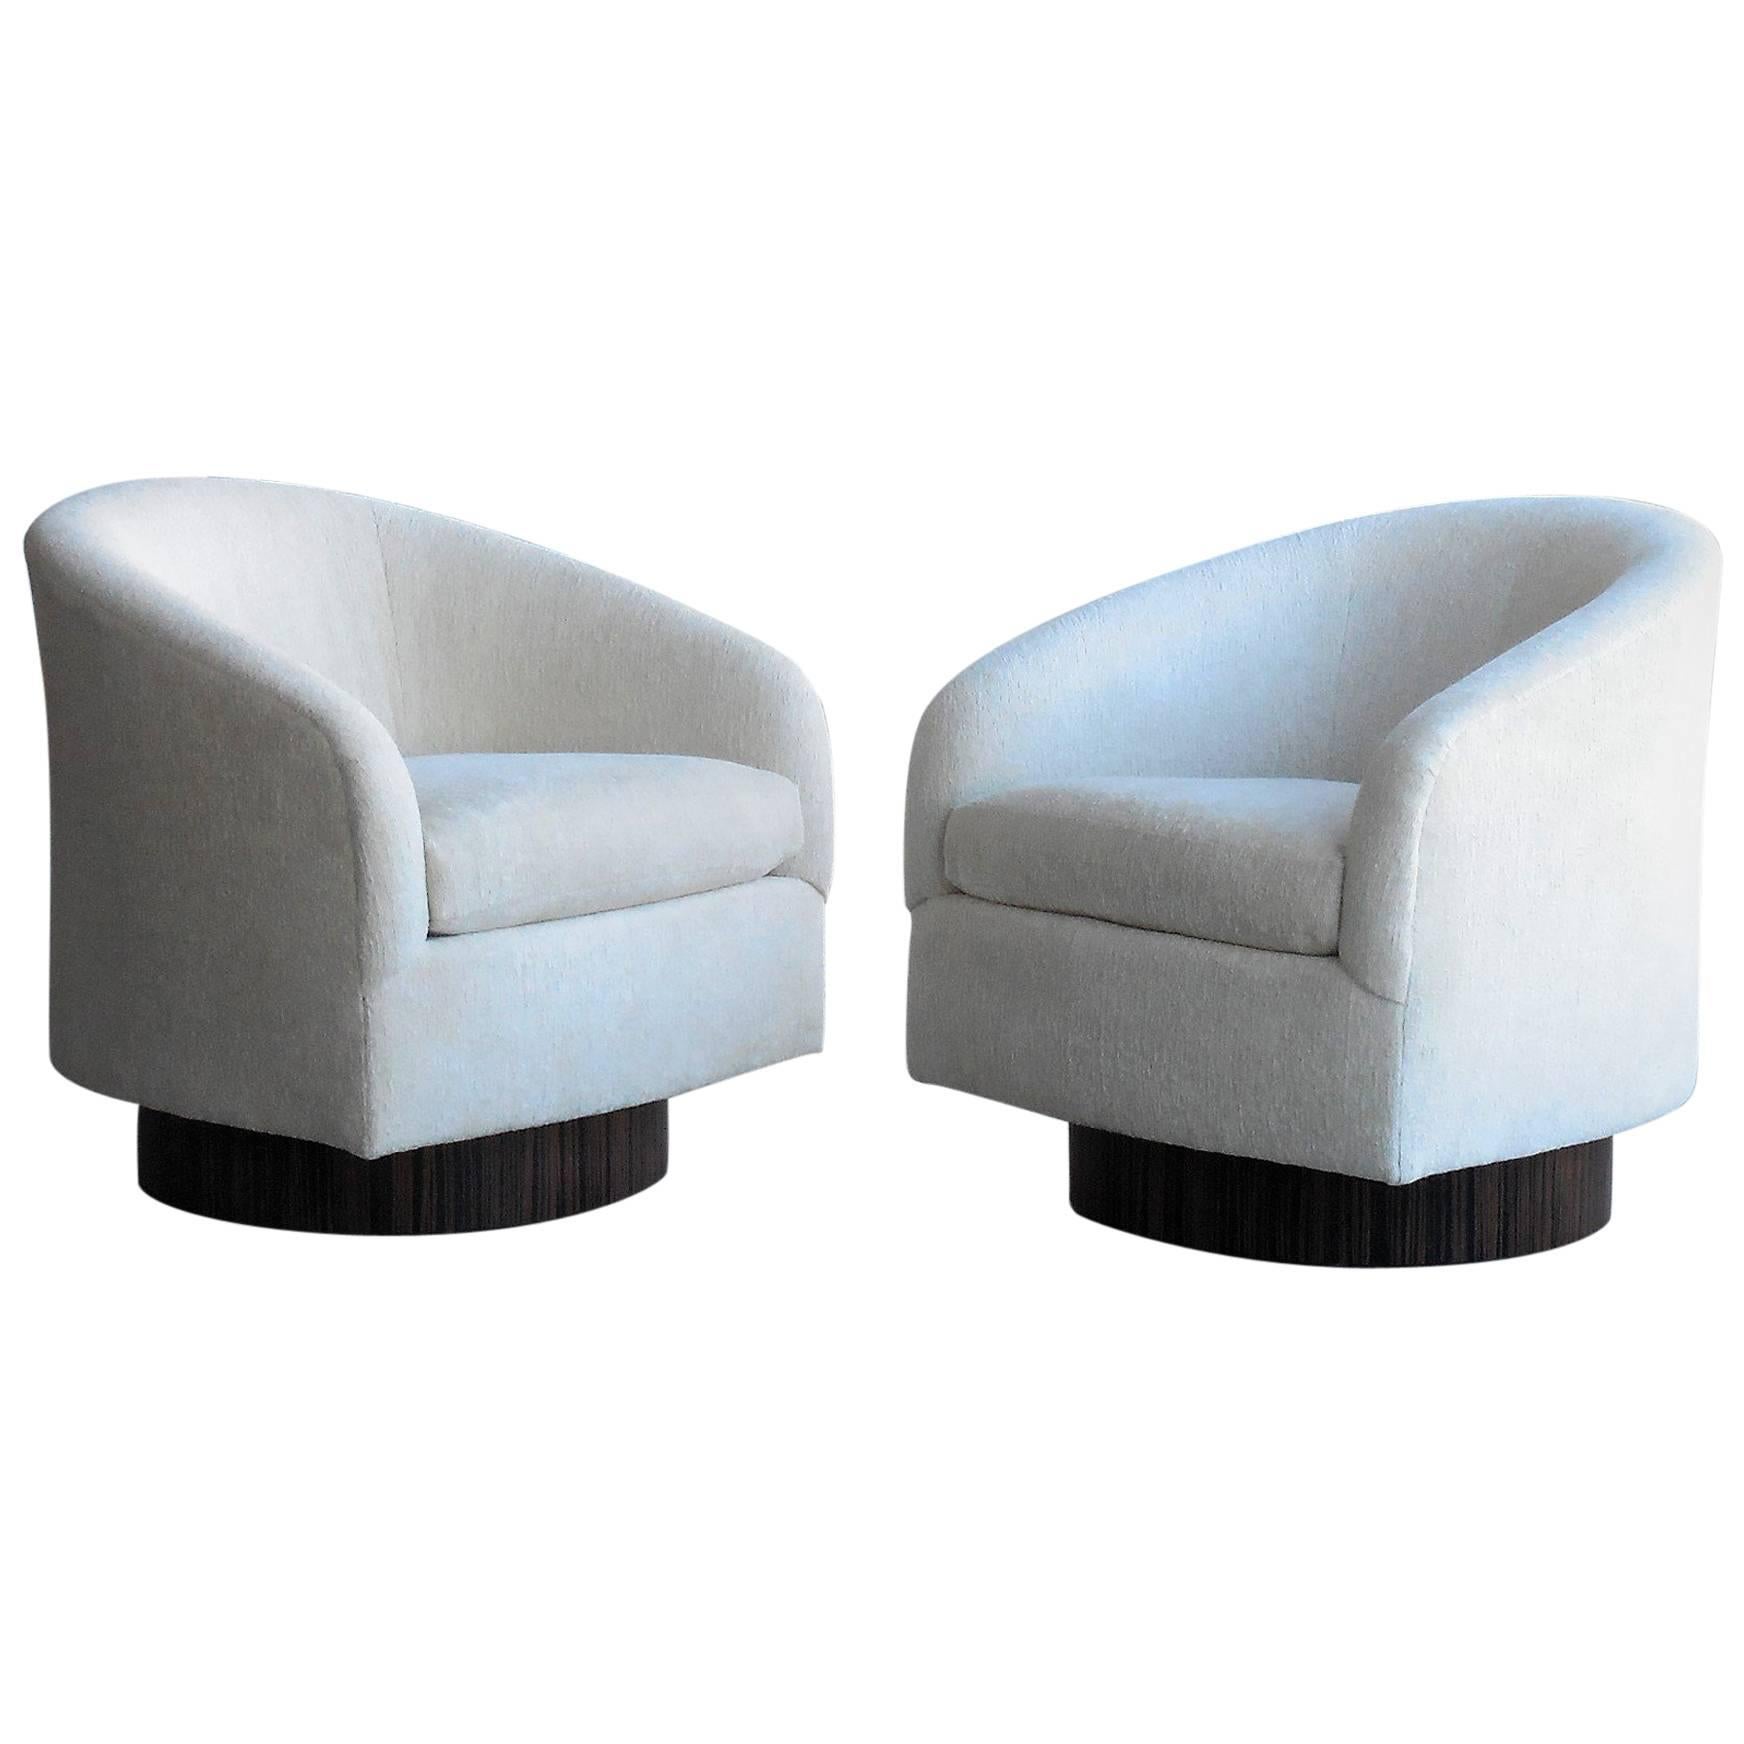 Pair of Plush Swivel Chairs with Macassar Bases